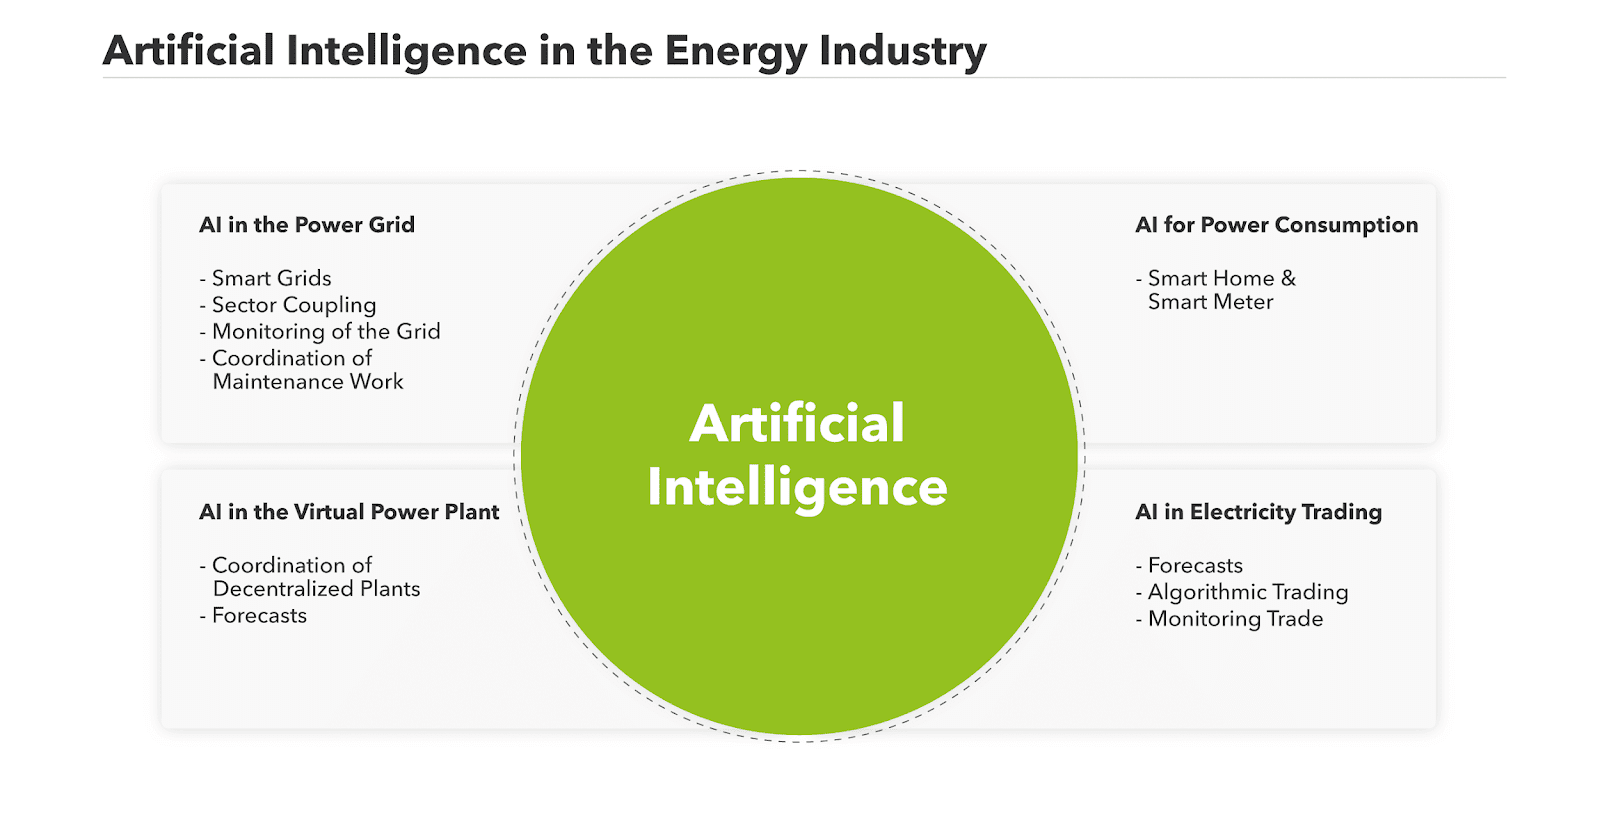 \Users\user\Desktop\artificial-intelligence-energy-industry.png